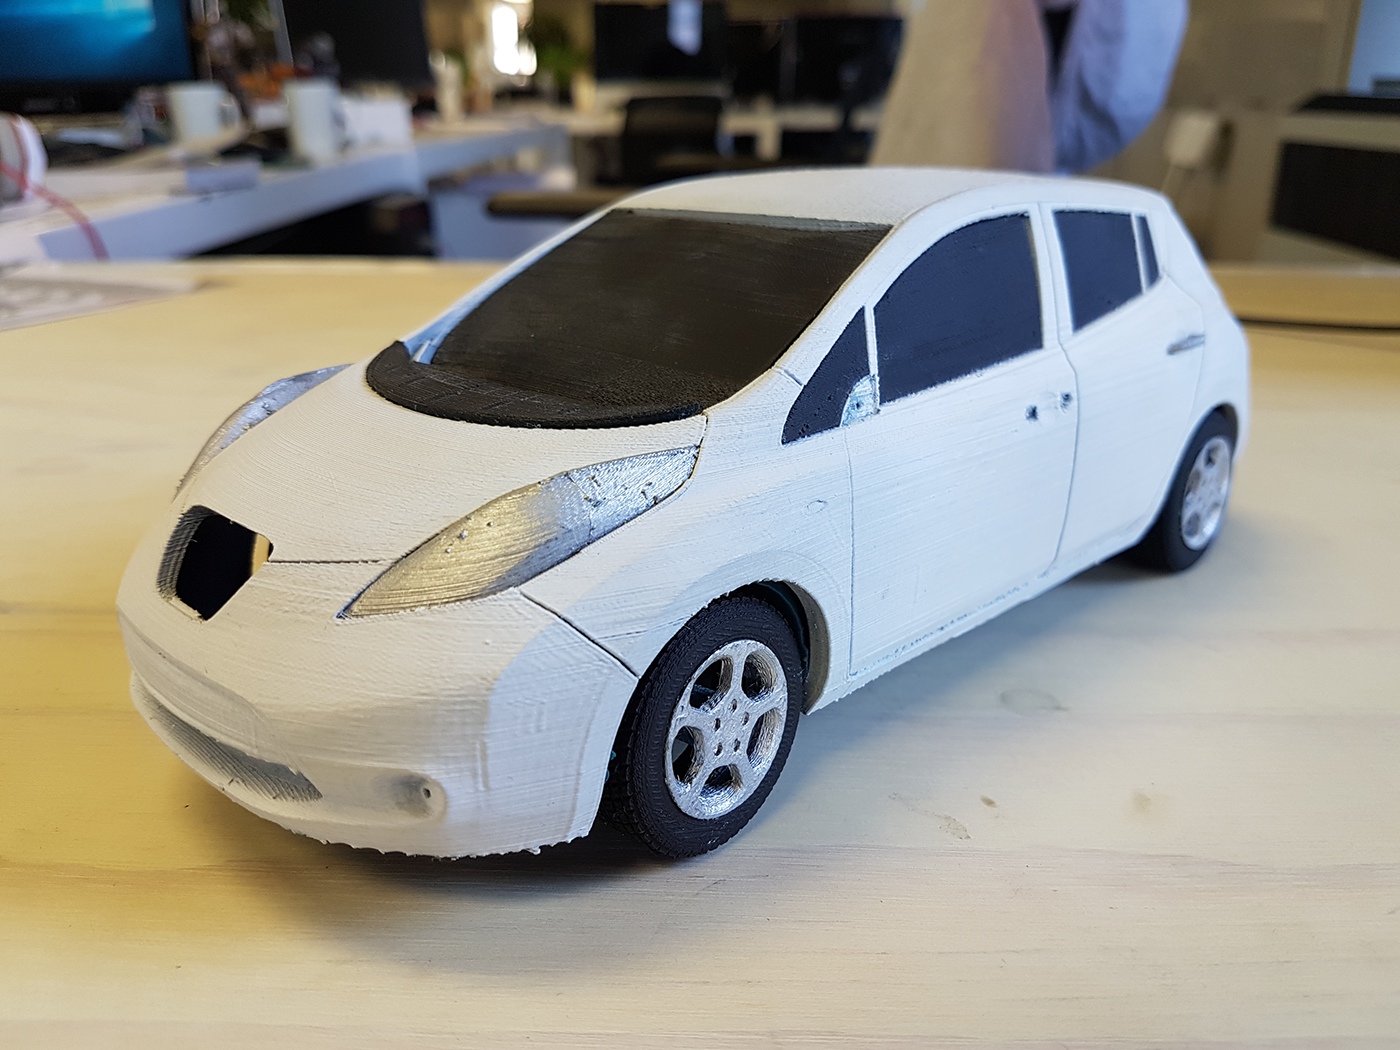 3d print 3D 3ds max vray photoshop industrial design  automotive   Cars models toys